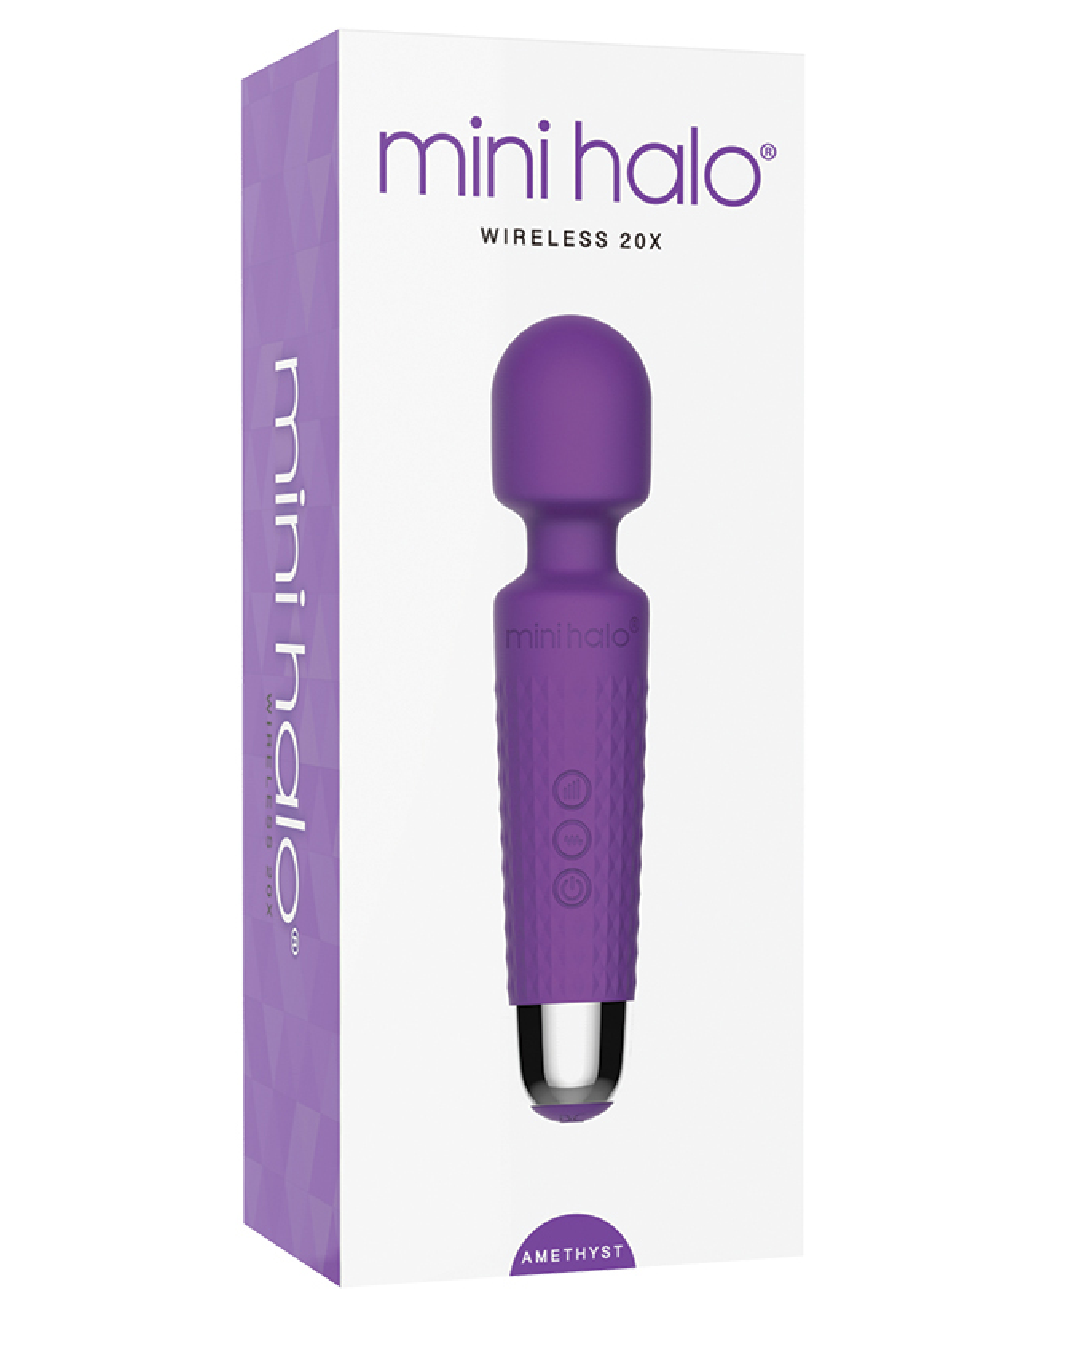 Mini Halo Extra Powerful Wand Vibrator - Purple  white and purple product box  